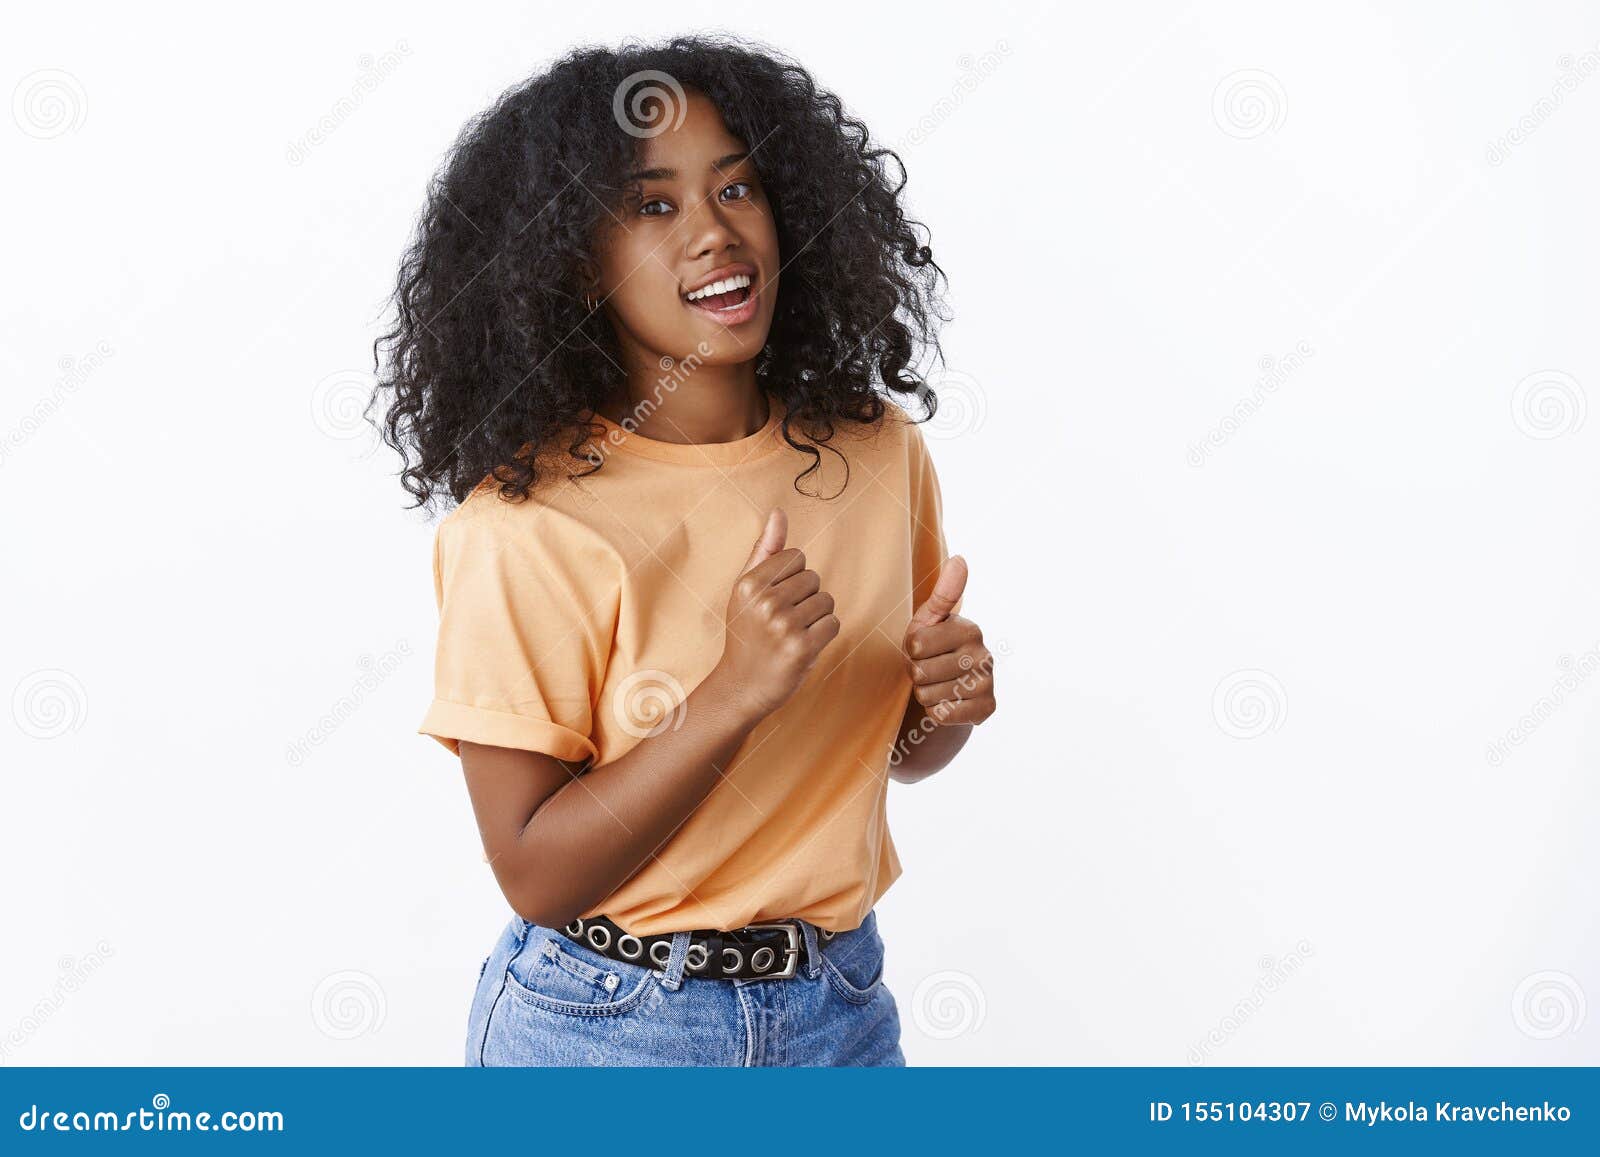 black college girl ( no sound )